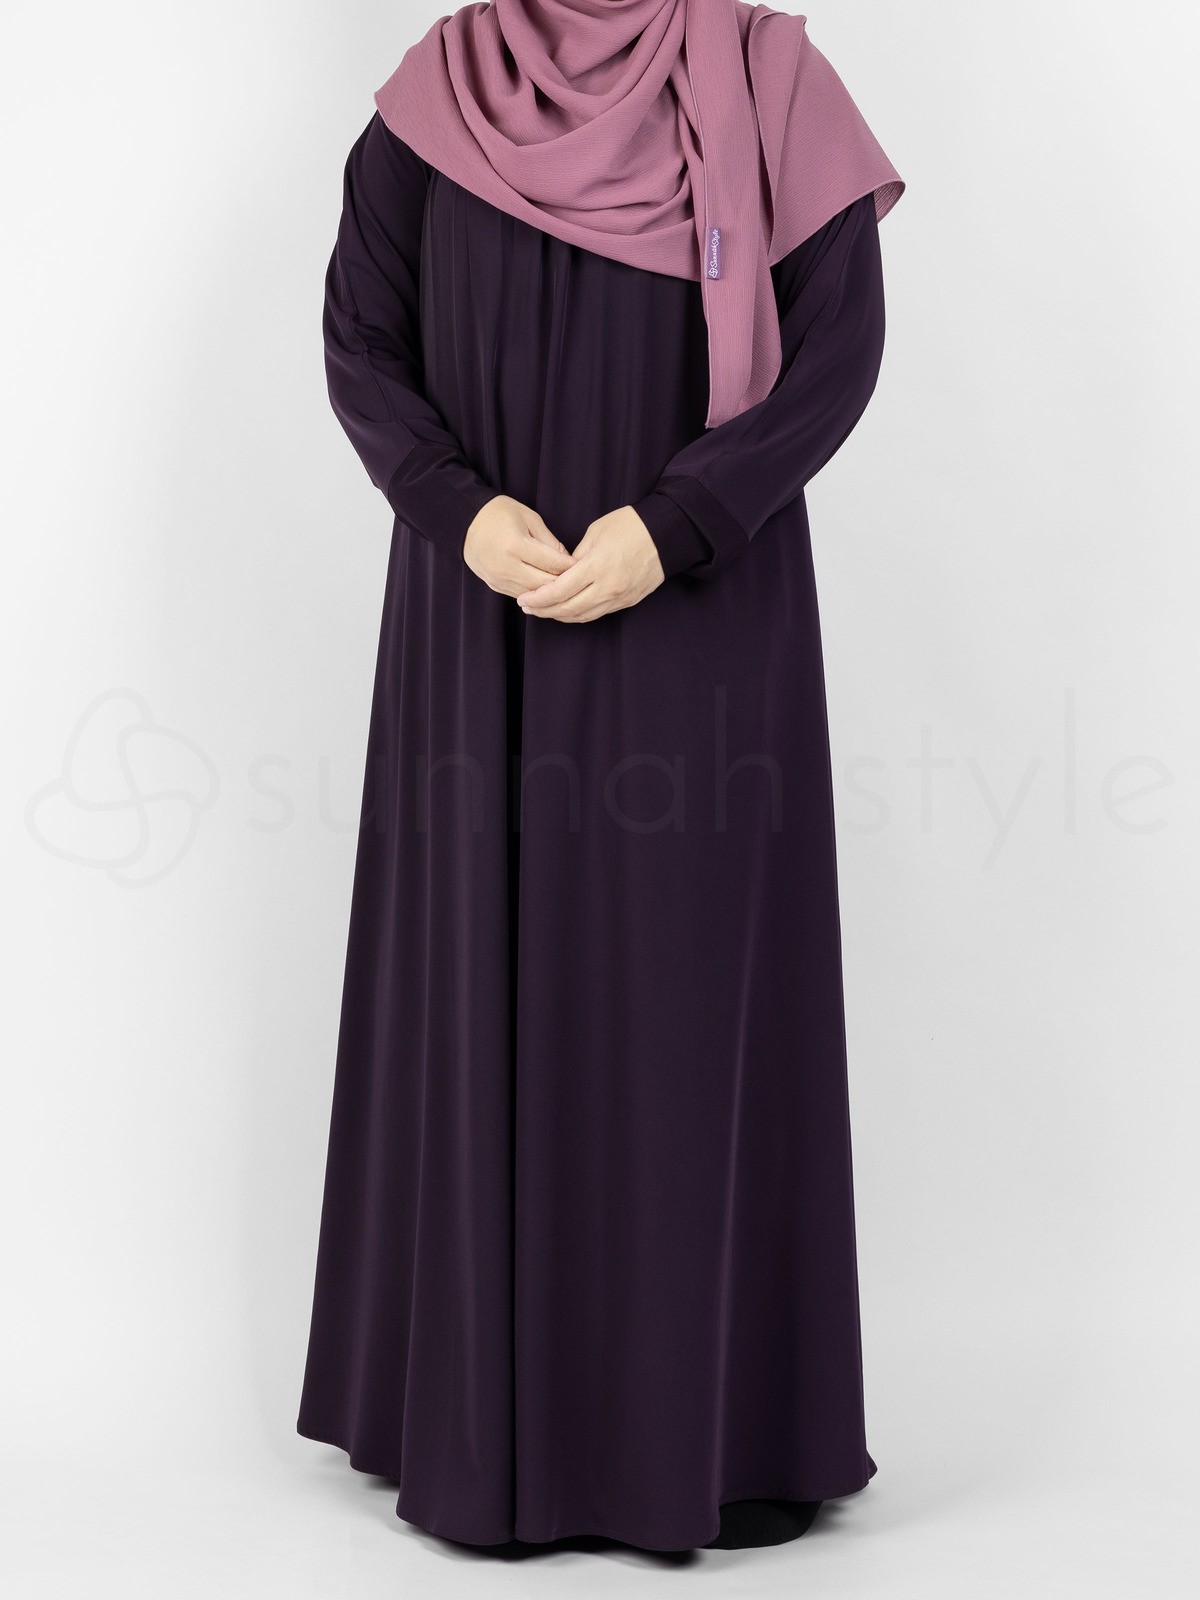 Simplicity Umbrella Abaya (Dark Violet)